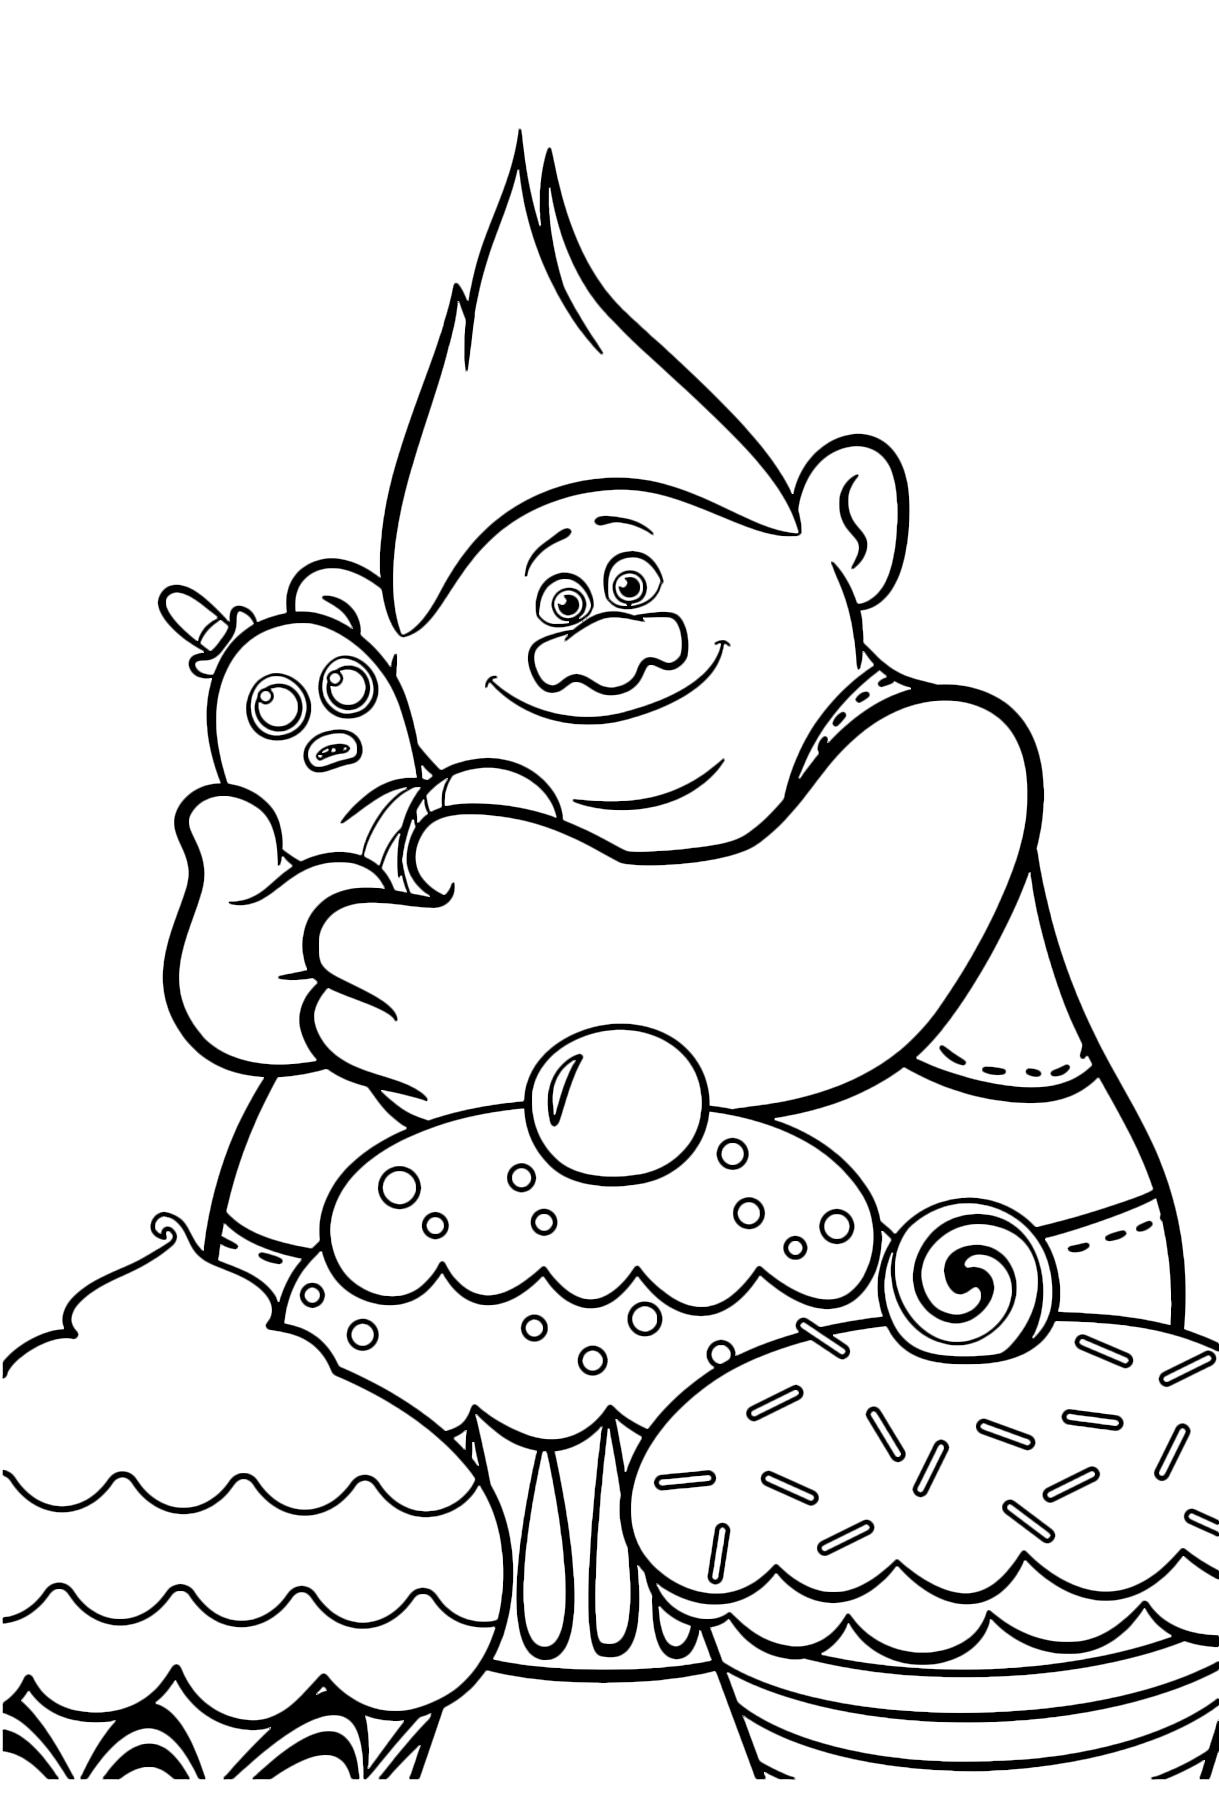 Trolls - Il Troll Grandino e Mr Dinkles felici davanti a tanti dolci